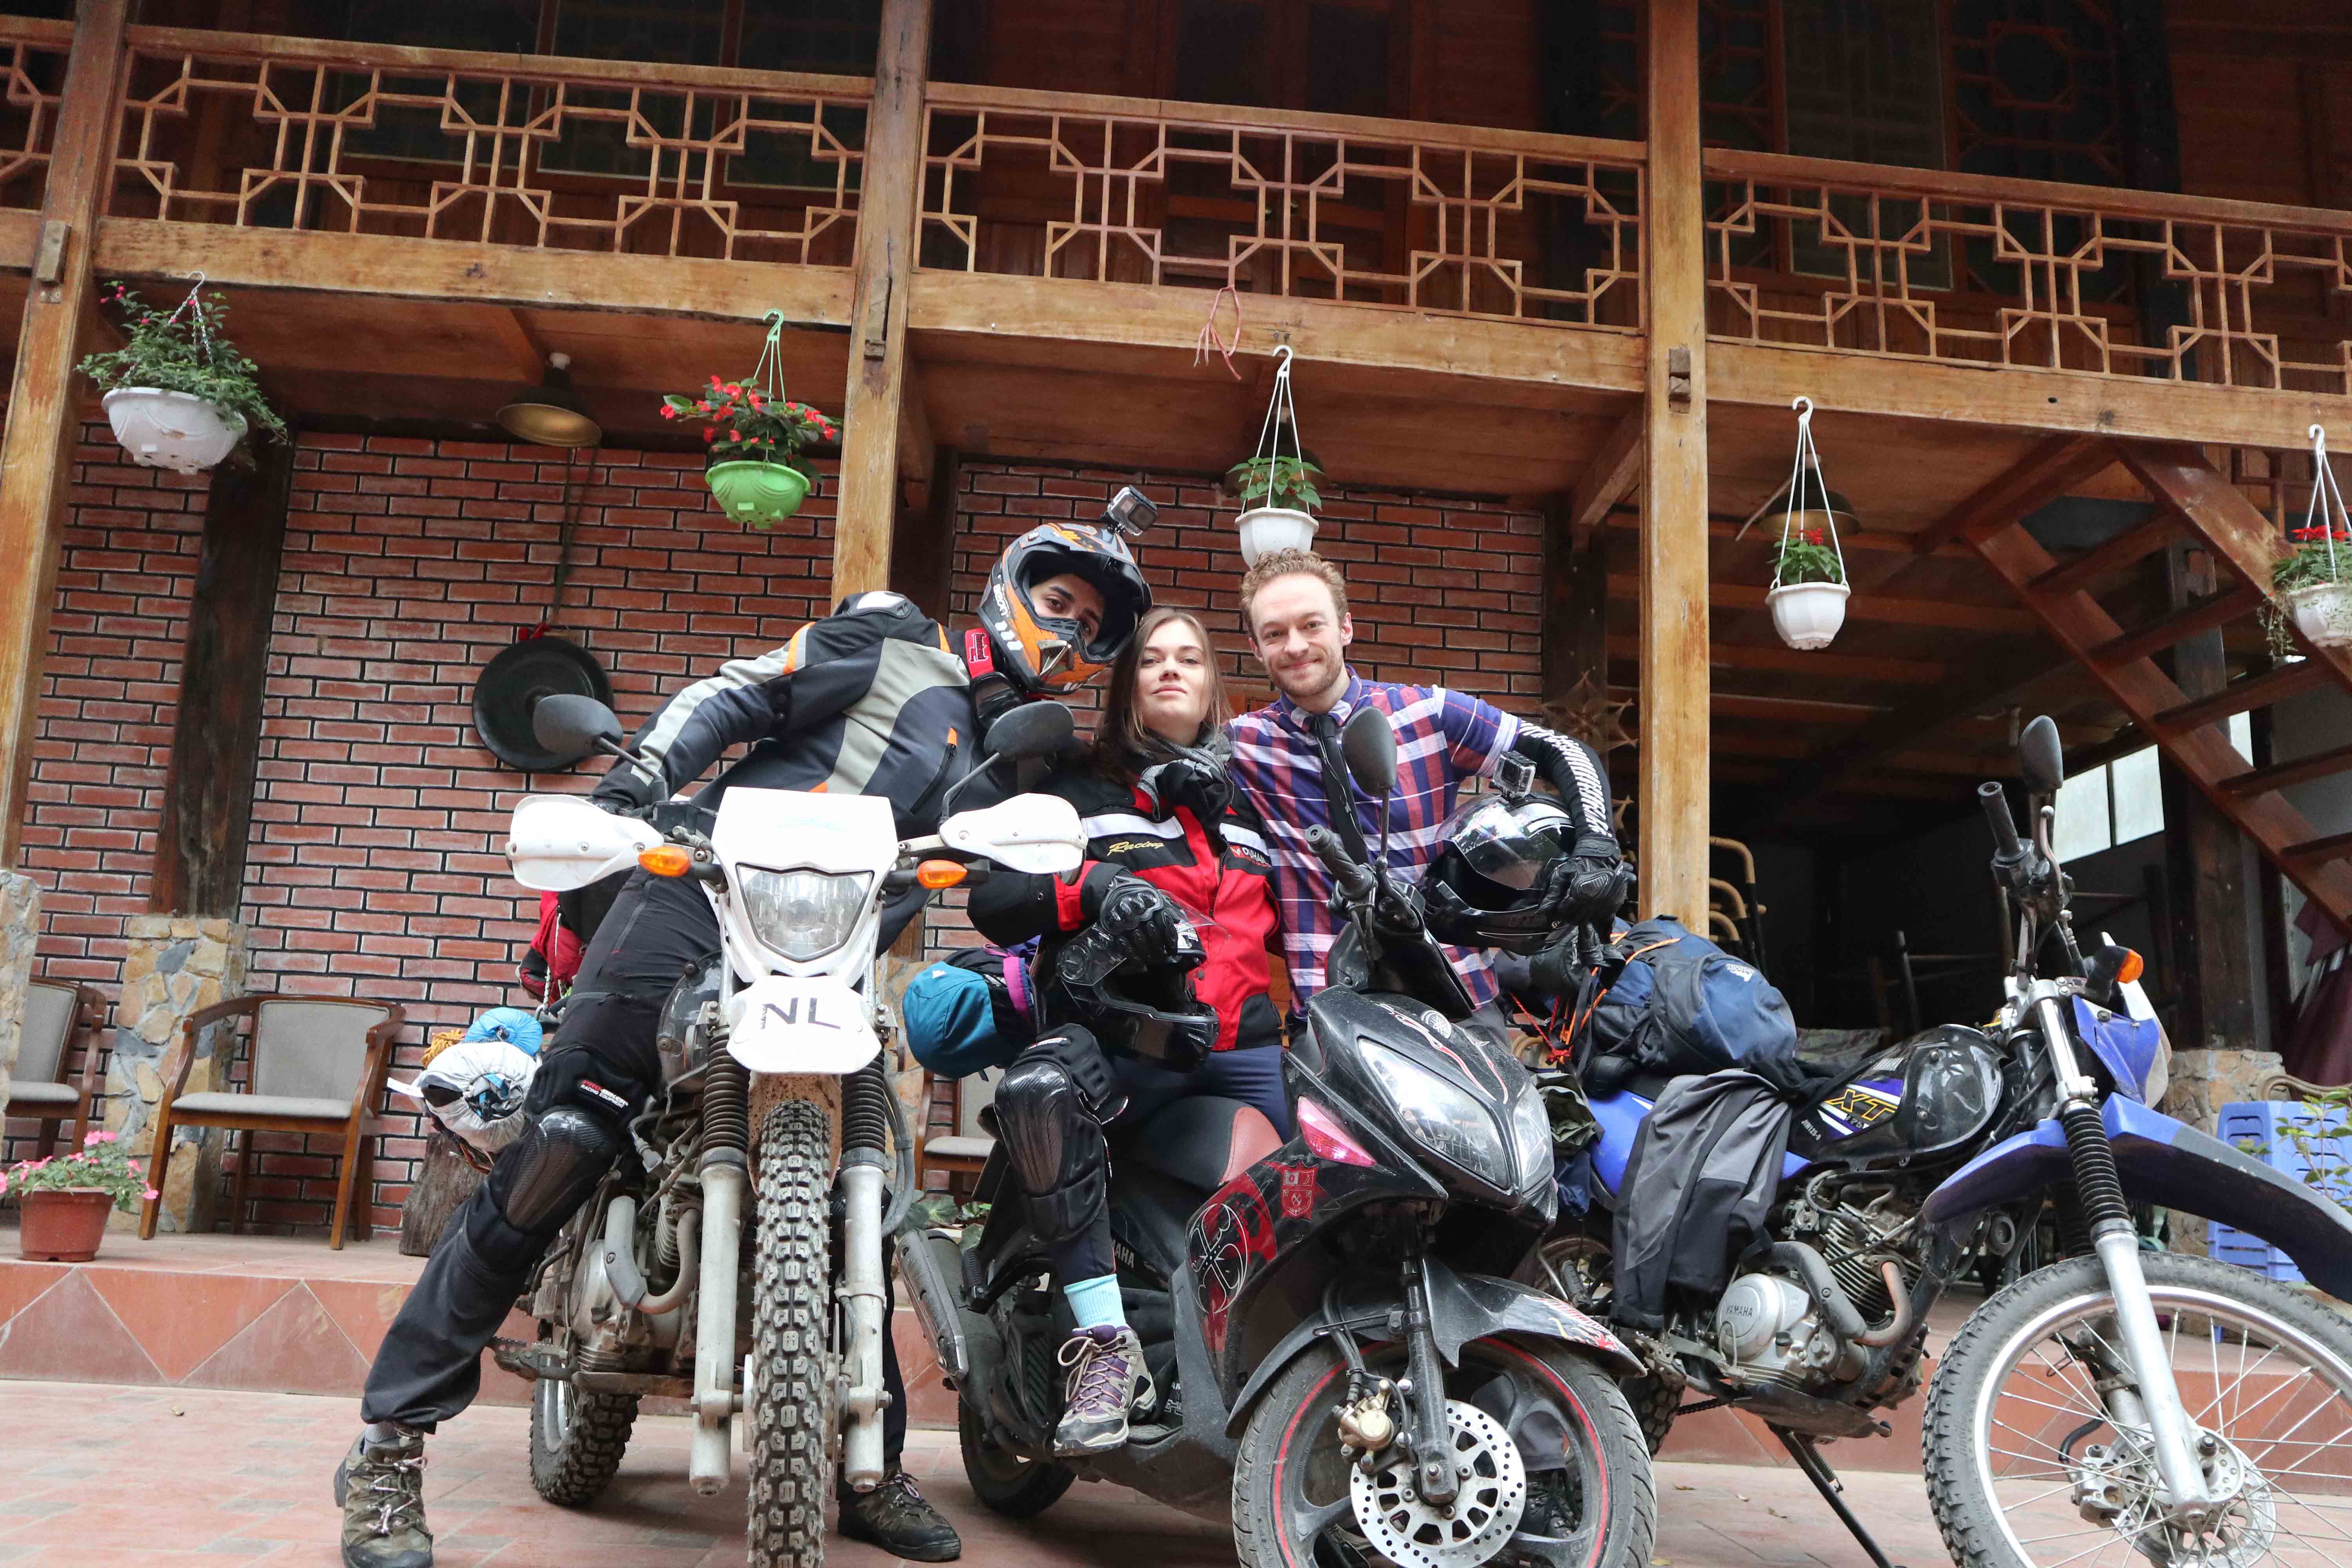 Motorcycle, Motorcross, Travel, Fun, Booking.com, Adventure, Vietnam, Travel, Touring, Roadtrip